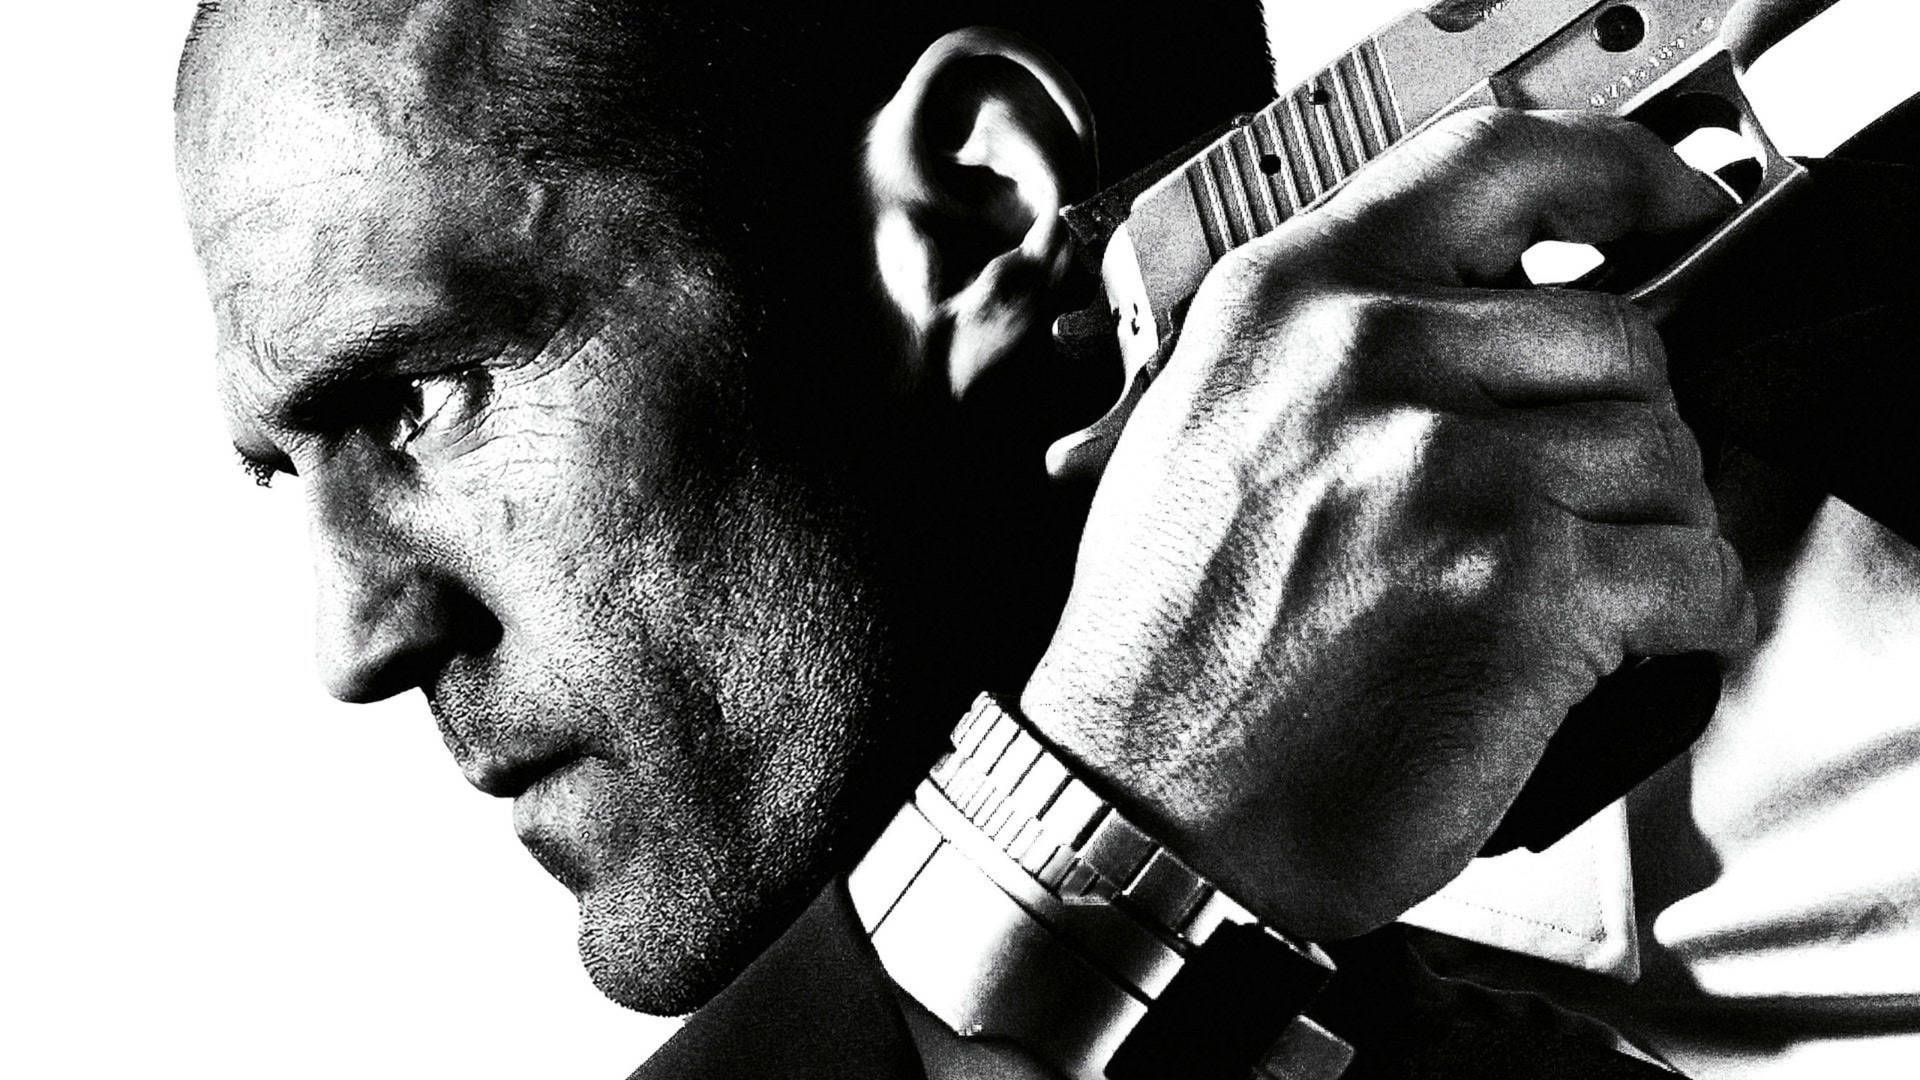 Jason Statham With Gun Monochrome Picture